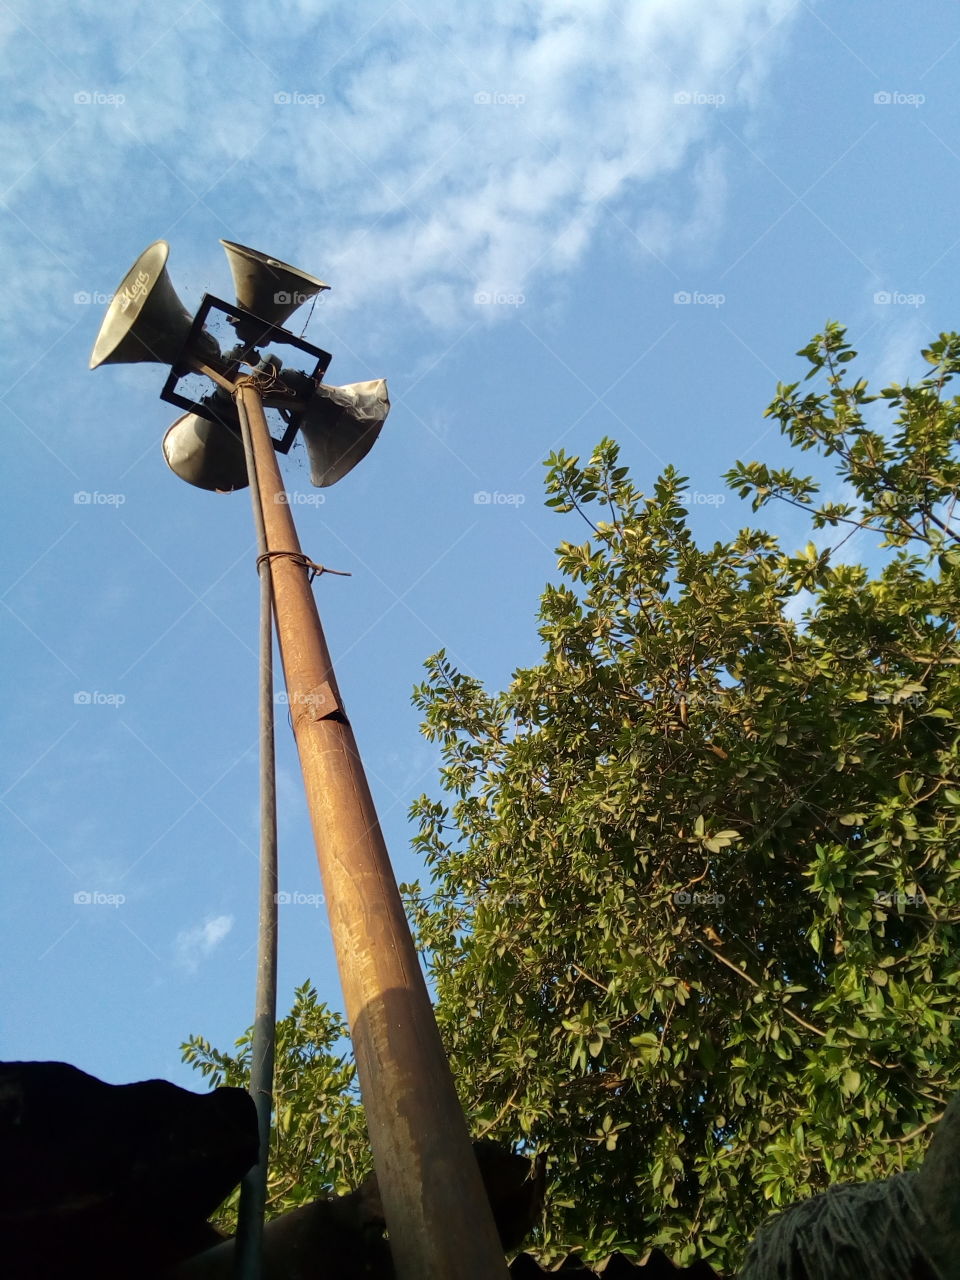 speaker pole